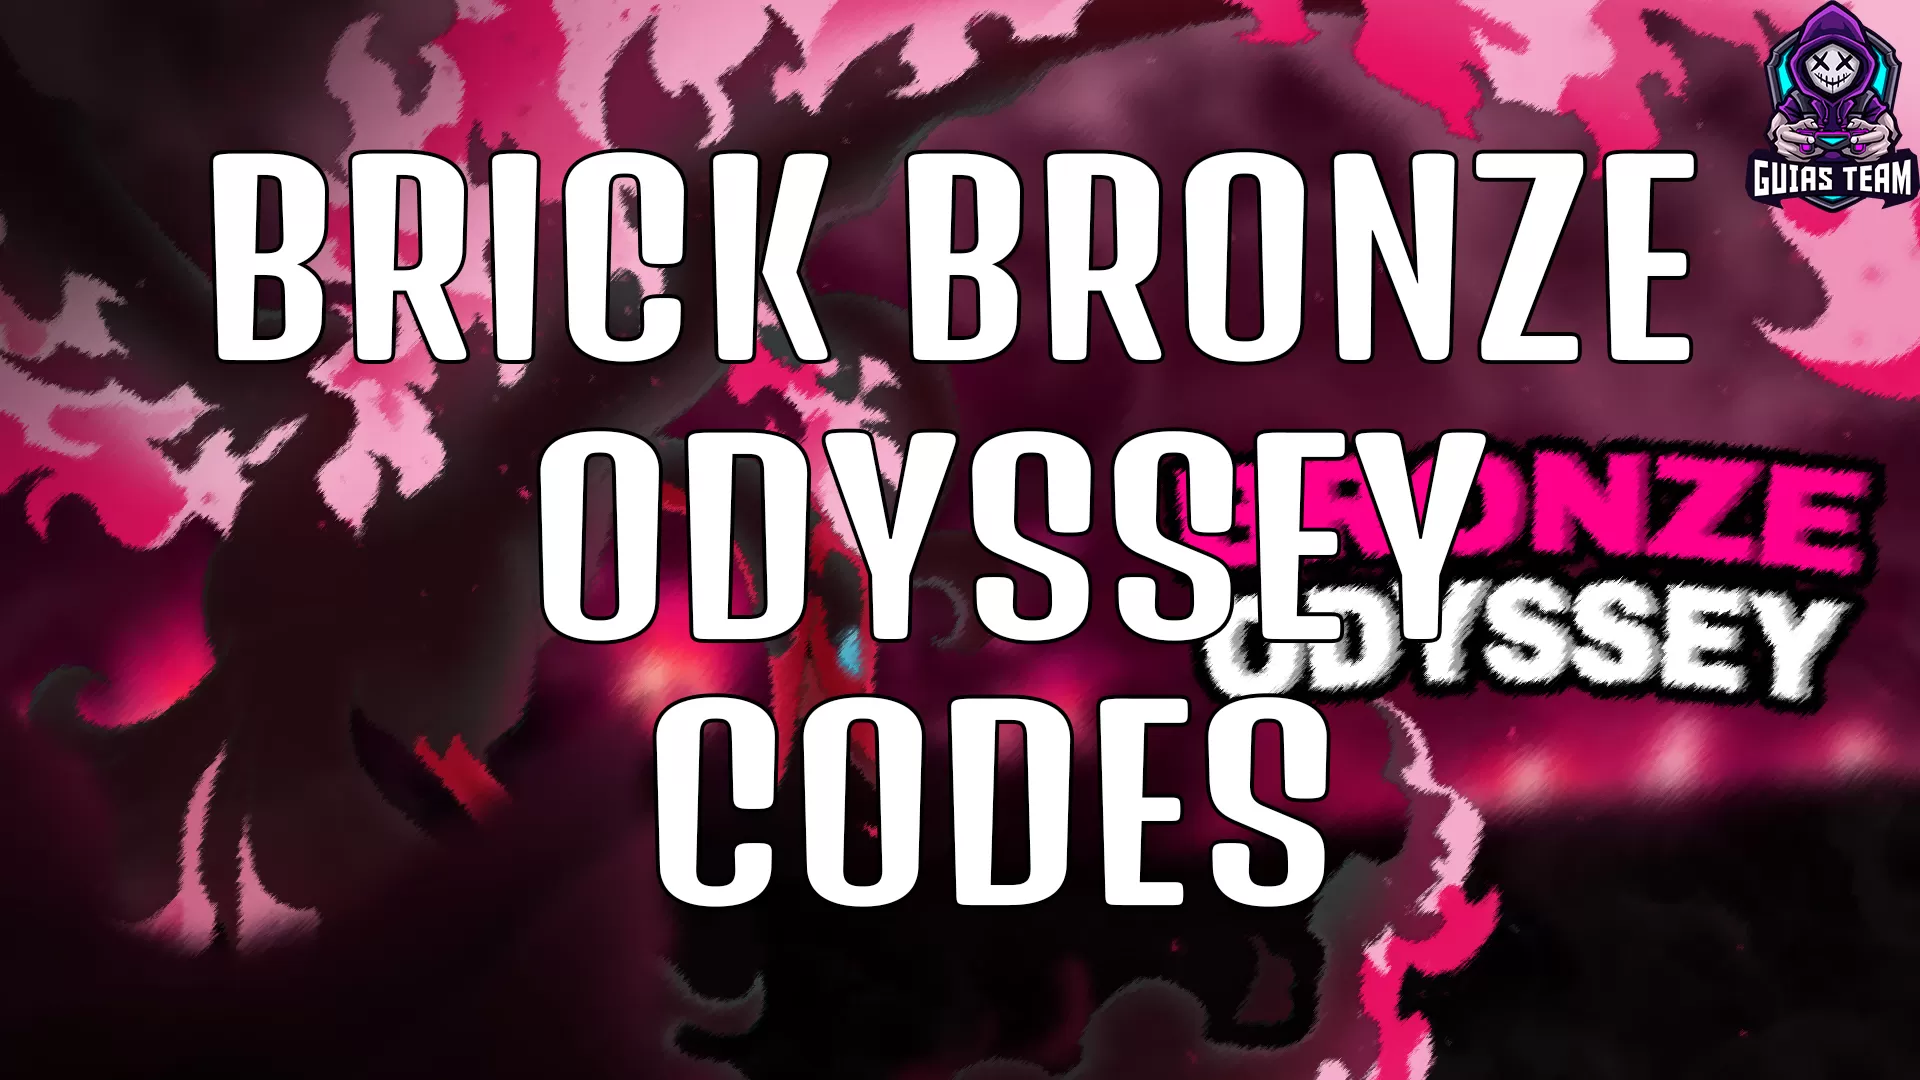 This Game has Lots of Codes, Pokemon Brick Bronze, Brick Bronze Odyssey